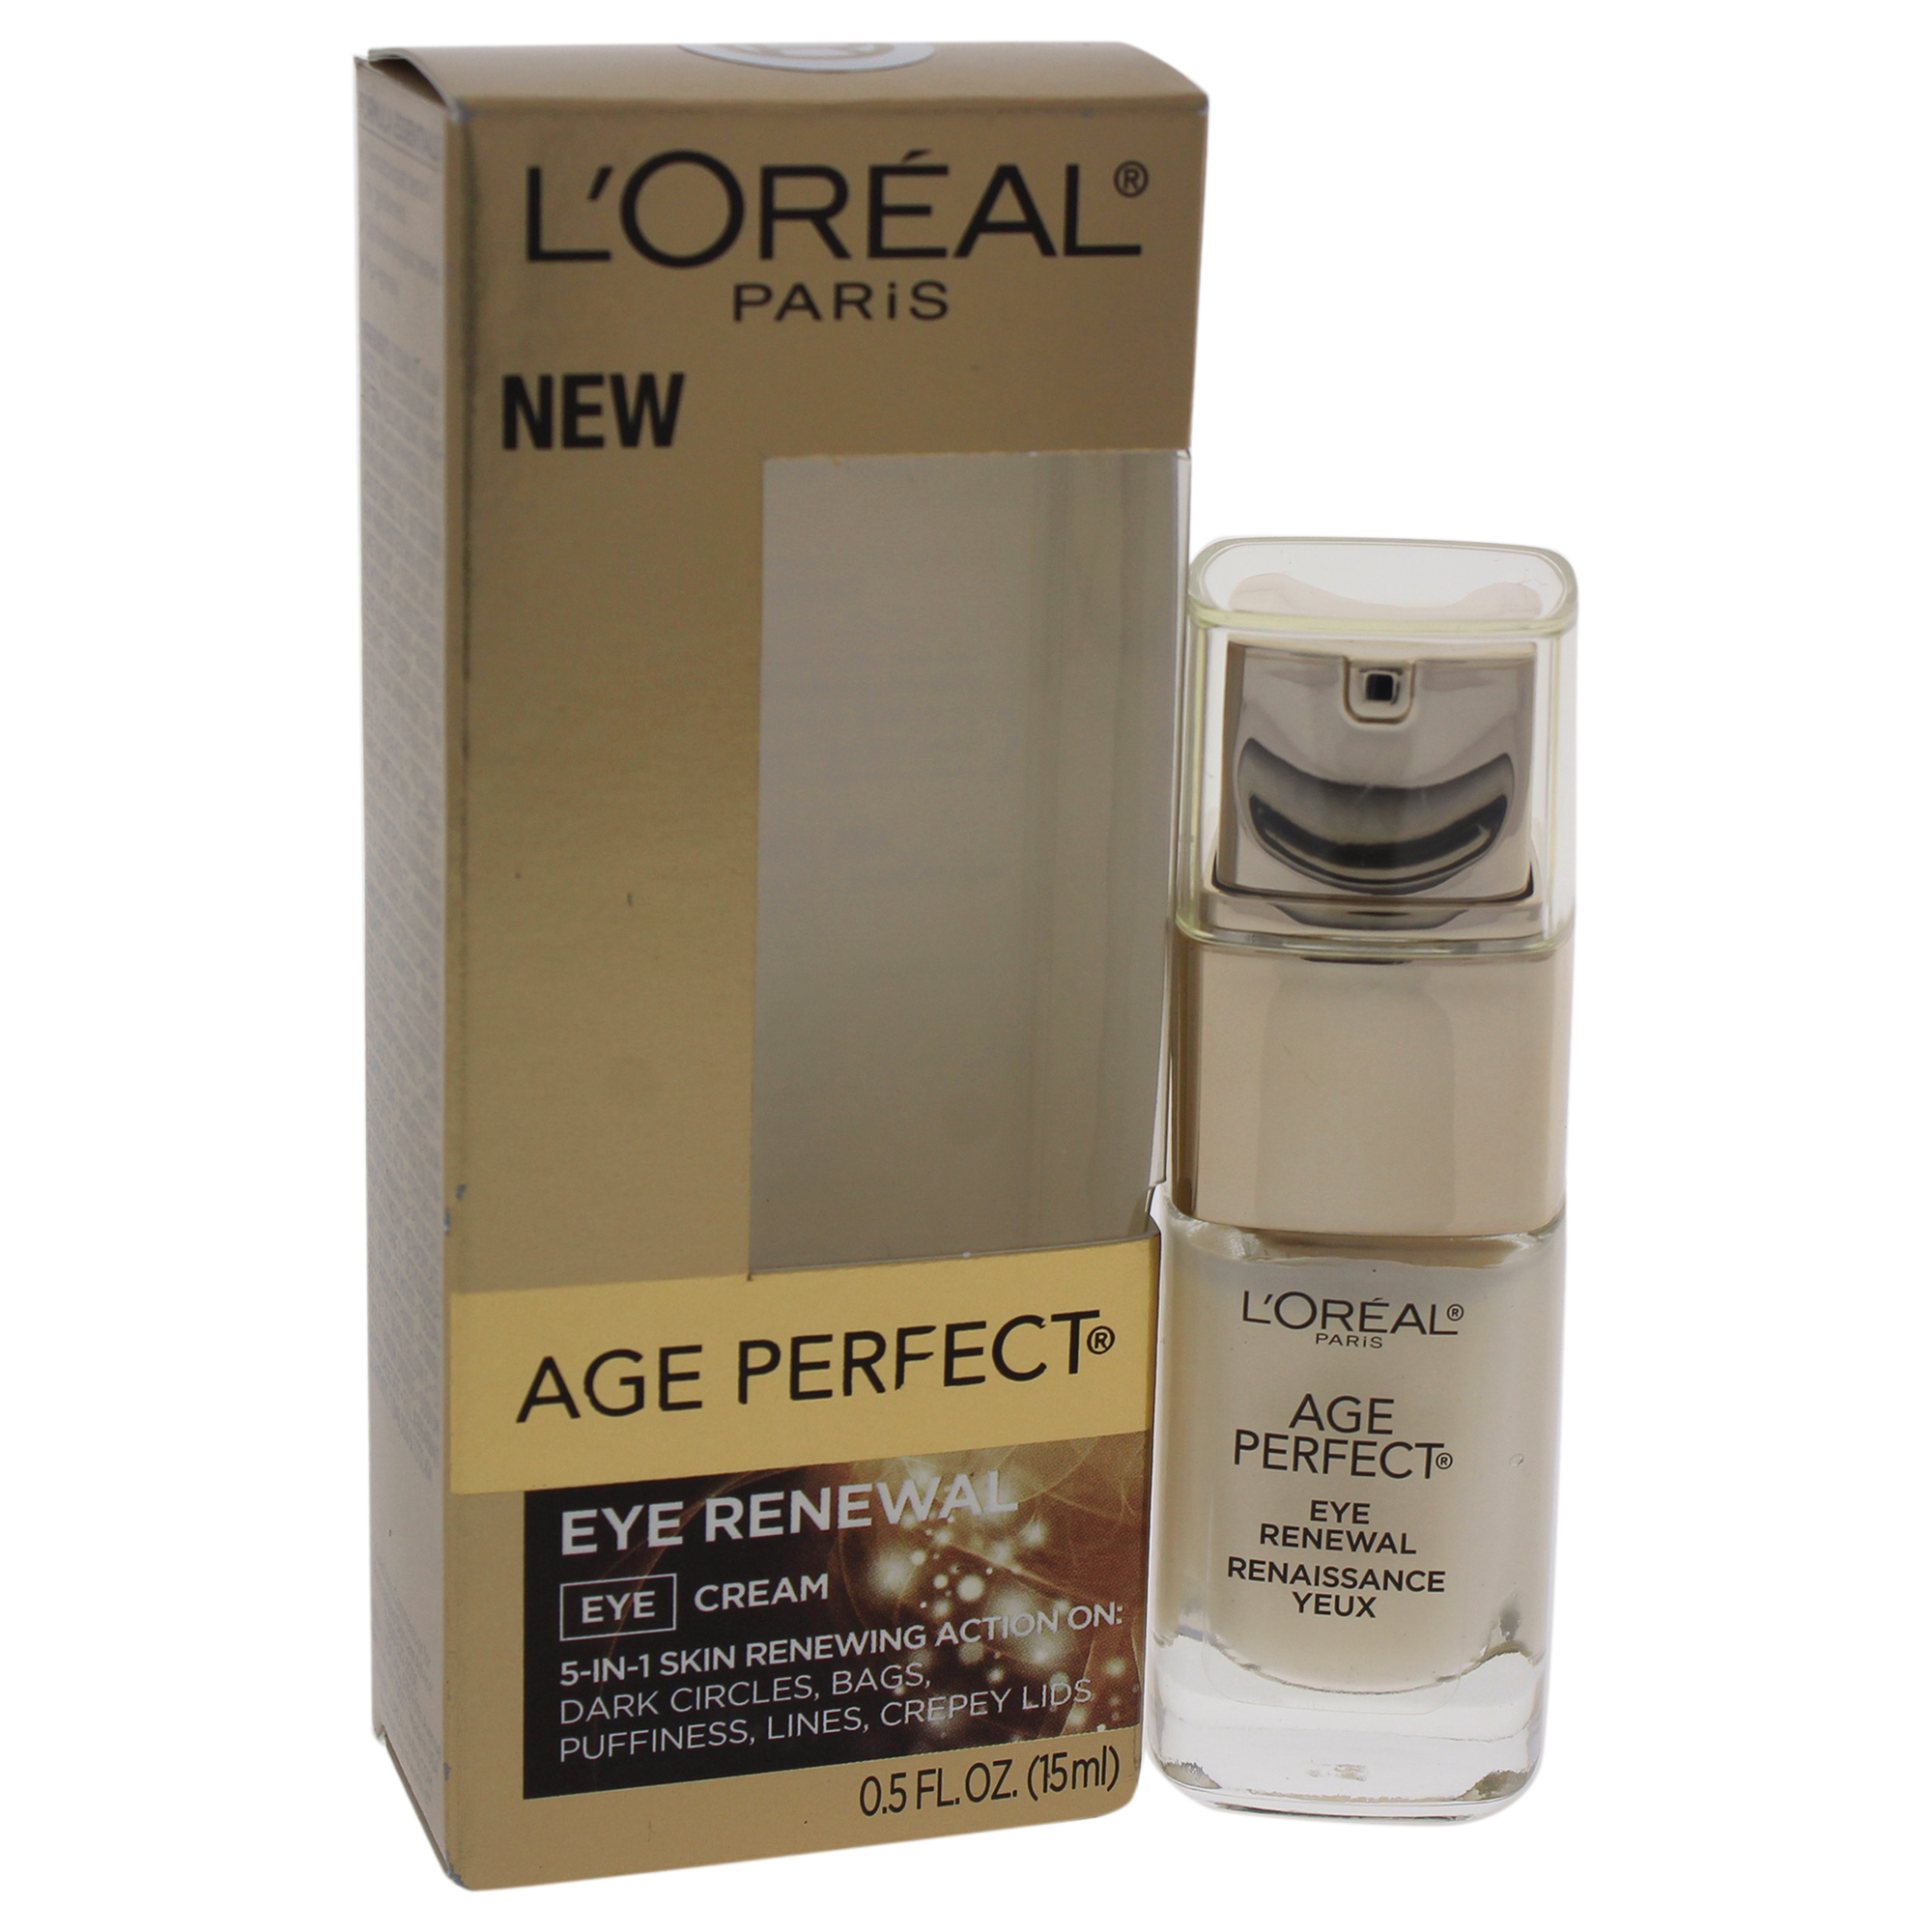 L'Oreal Age Perfect Eye Renewal Eye Cream